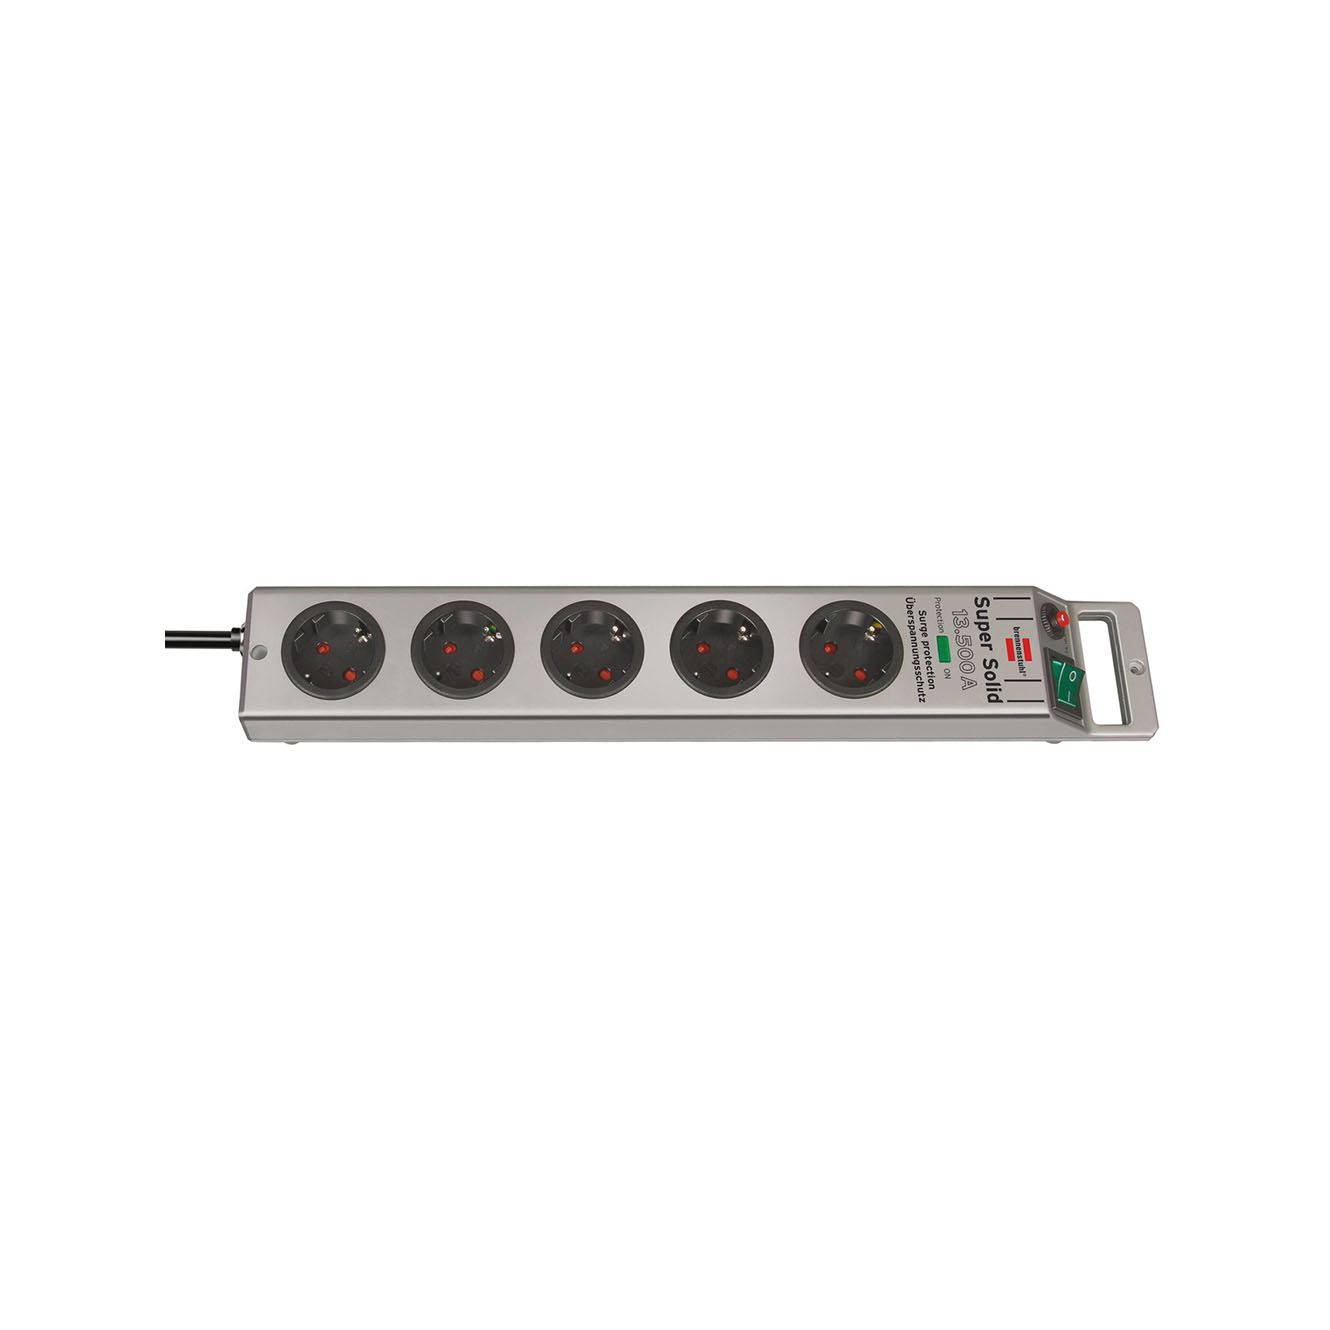 Сетевой фильтр Brennenstuhl Super-Solid 13,5 А 5 розеток кабель 2,5 м H05VV-F 3G1,5 серый 1153340315